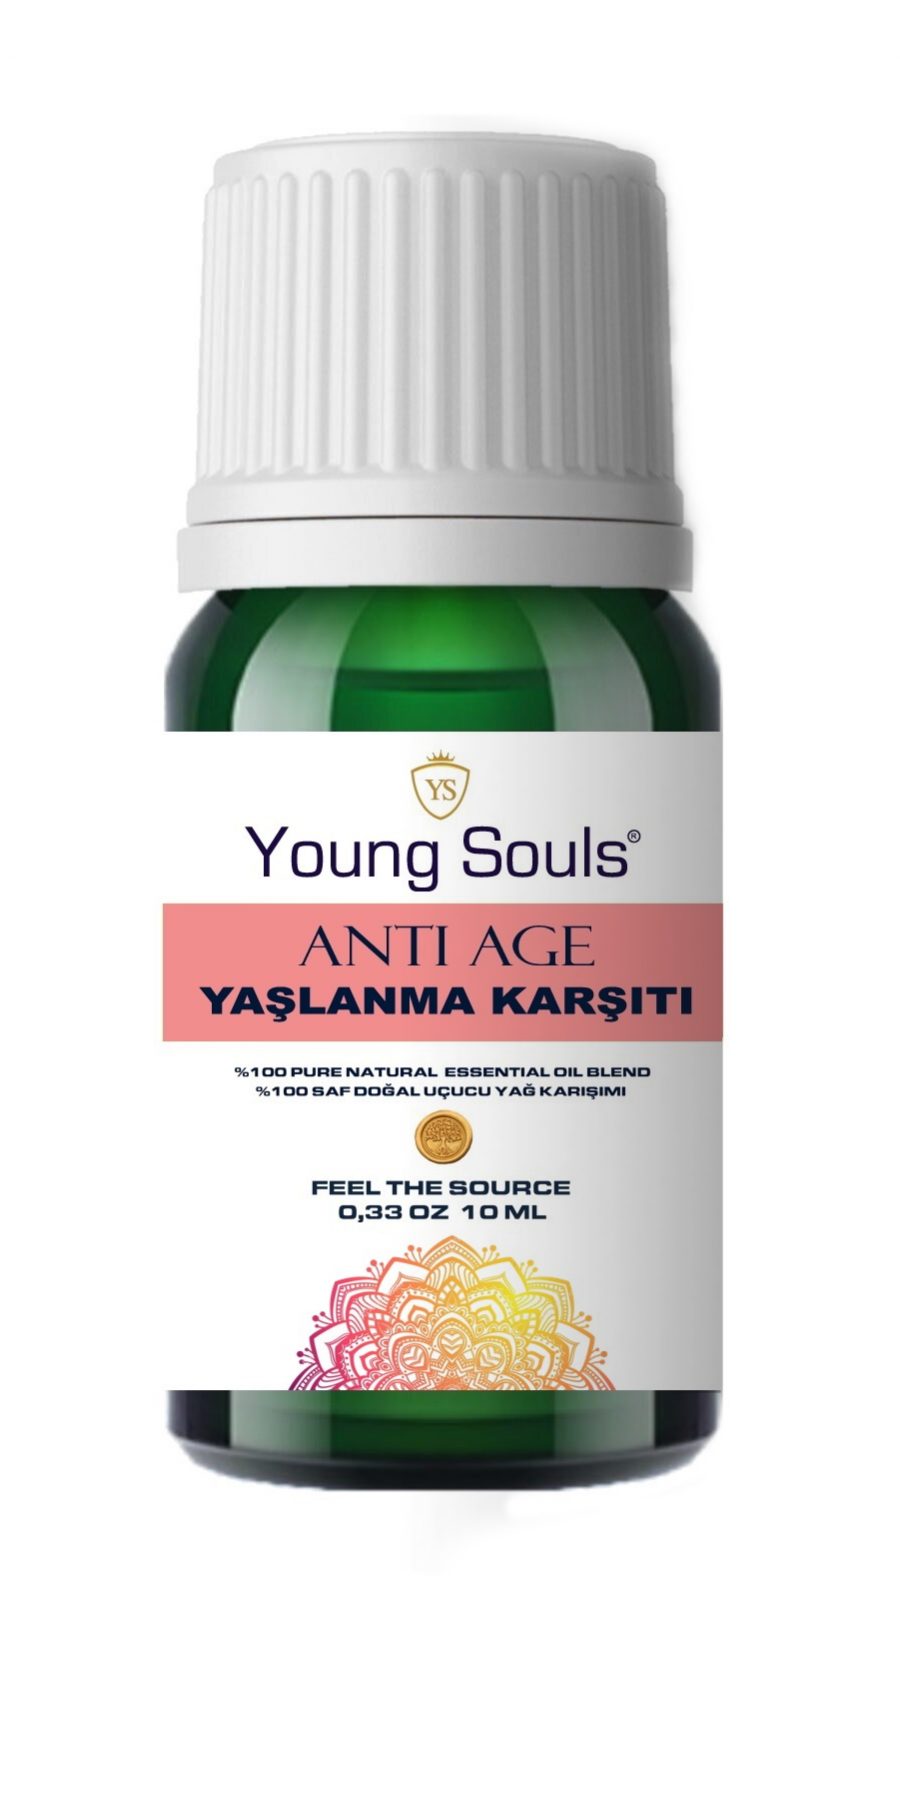 Young Souls Aromaterapi Anti-Age (Yaşlanma Karşıtı) Uçucu Yağ Karışımı %100 Pure 10 ml